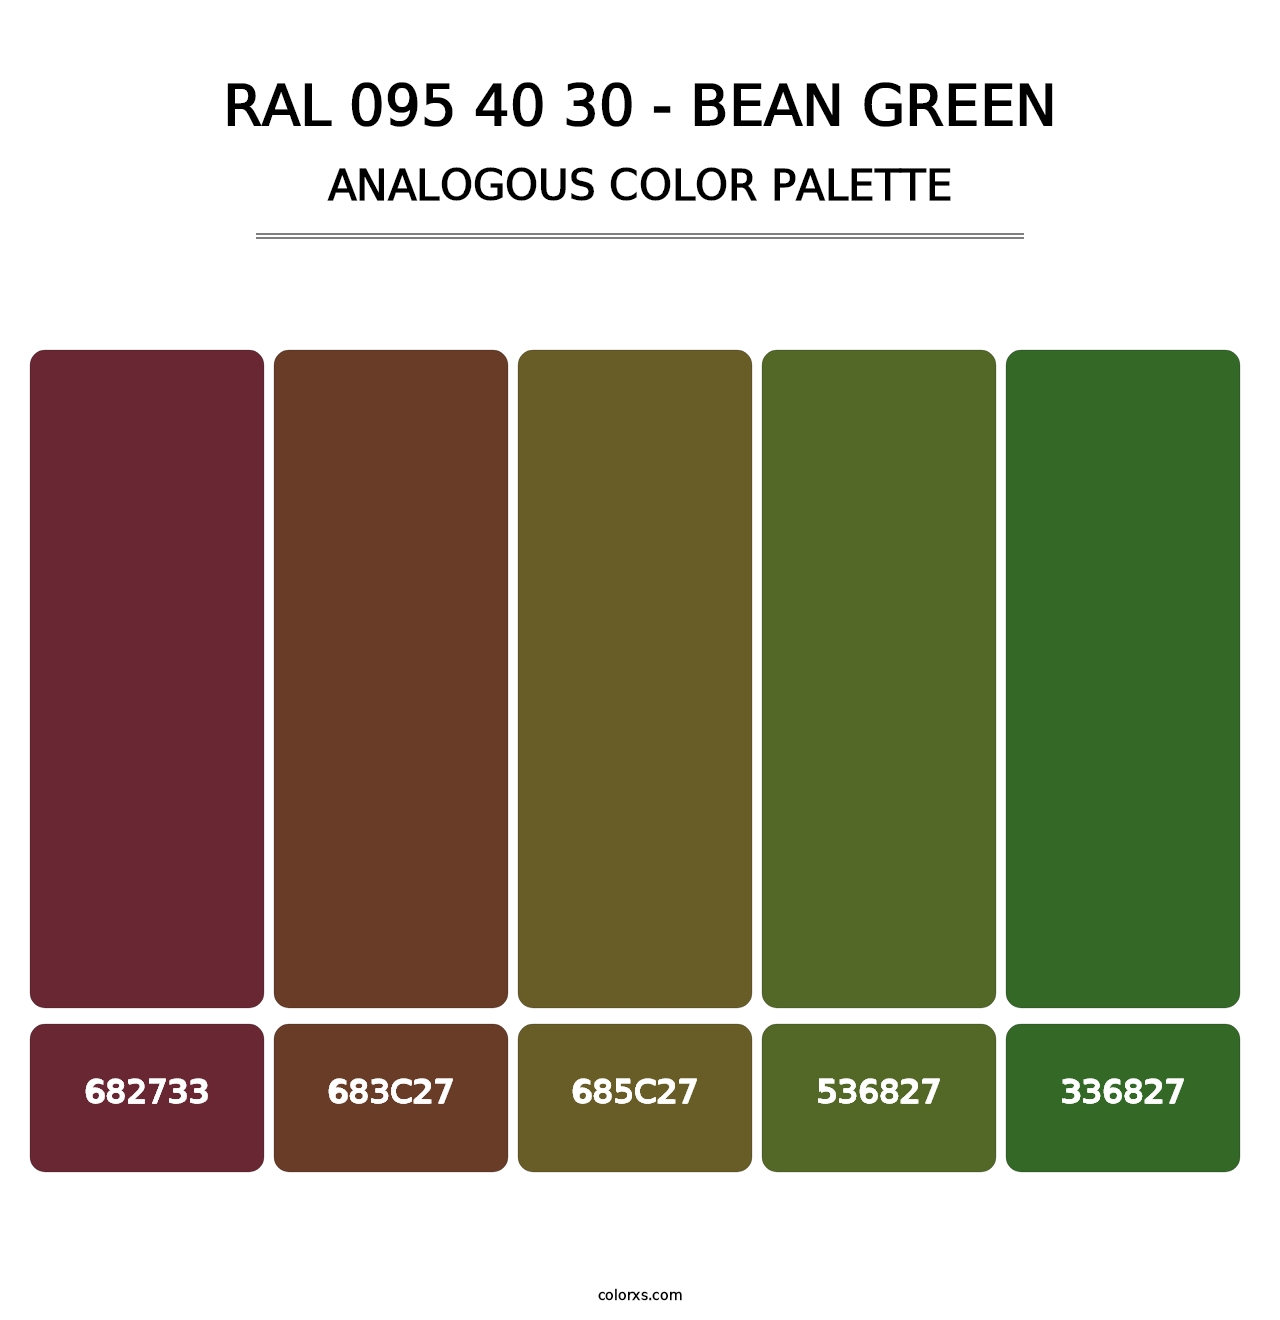 RAL 095 40 30 - Bean Green - Analogous Color Palette